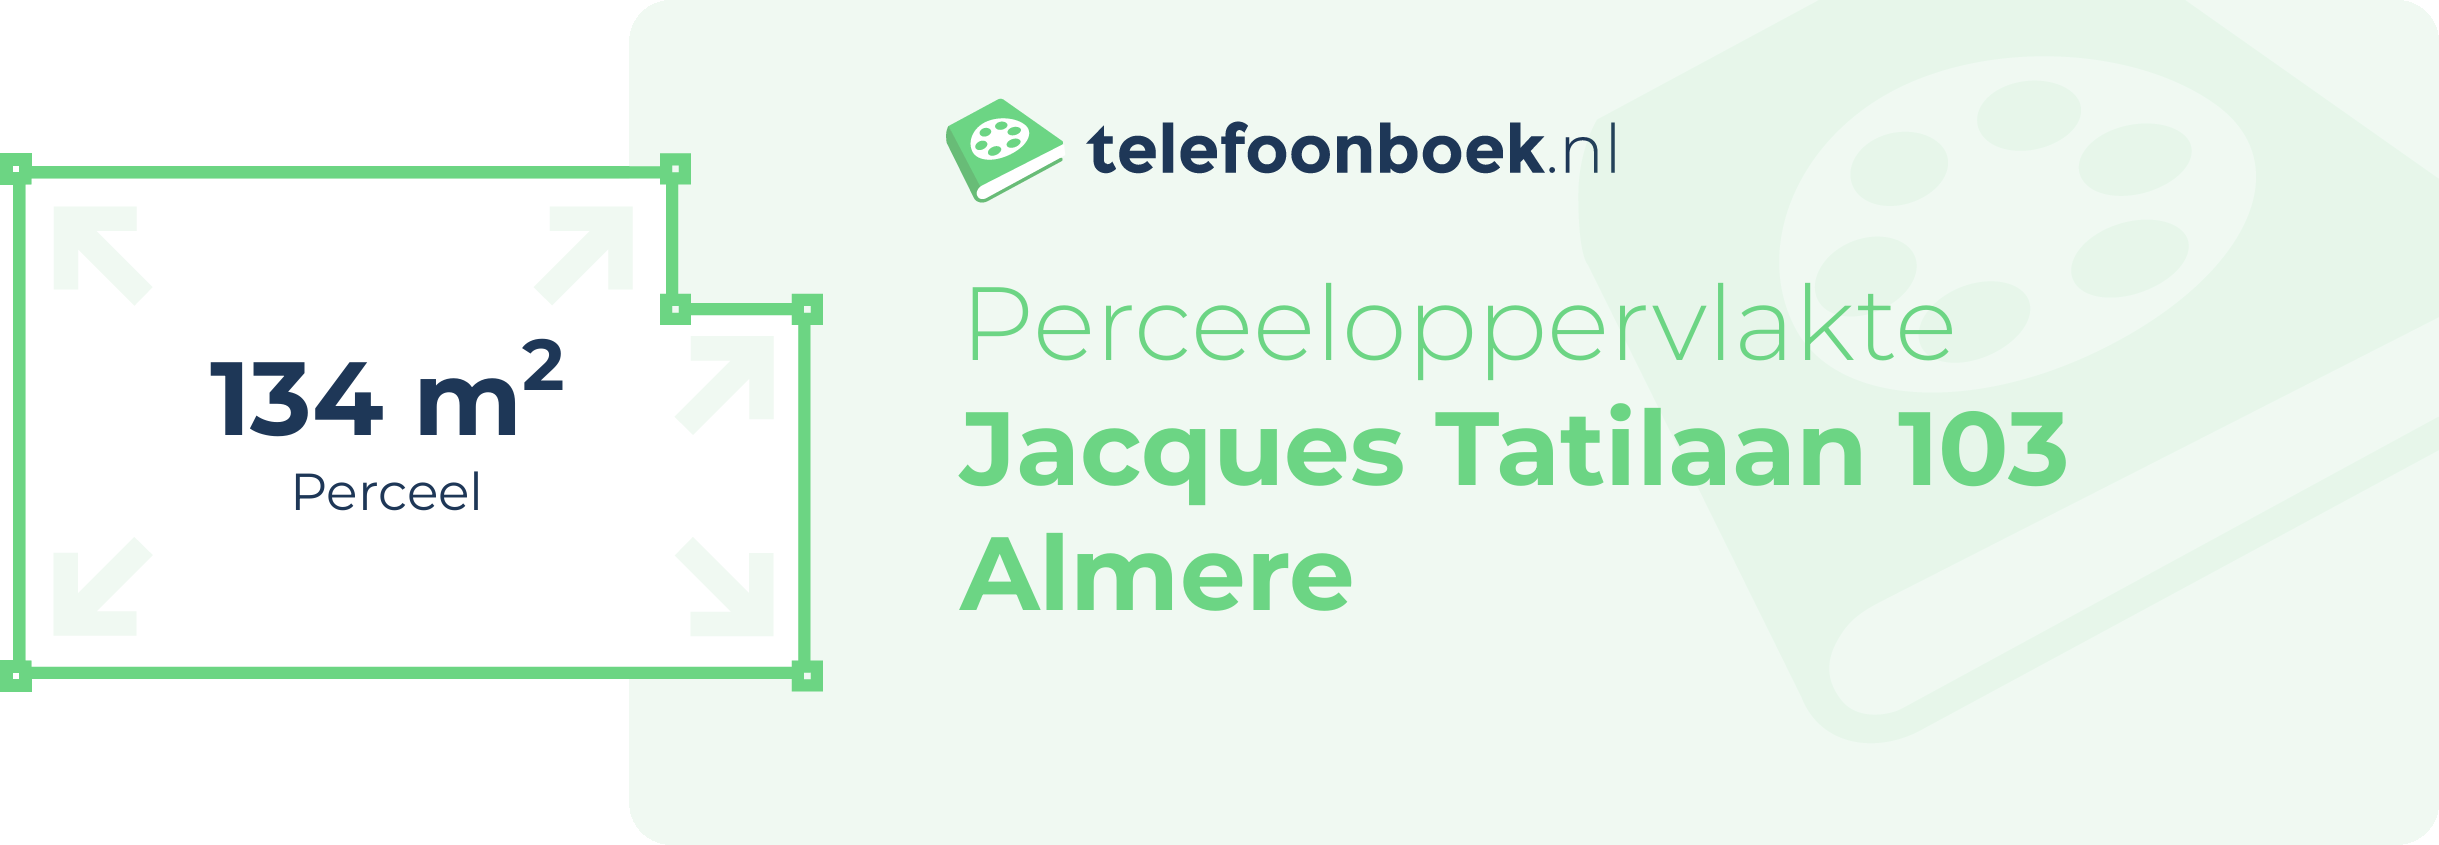 Perceeloppervlakte Jacques Tatilaan 103 Almere